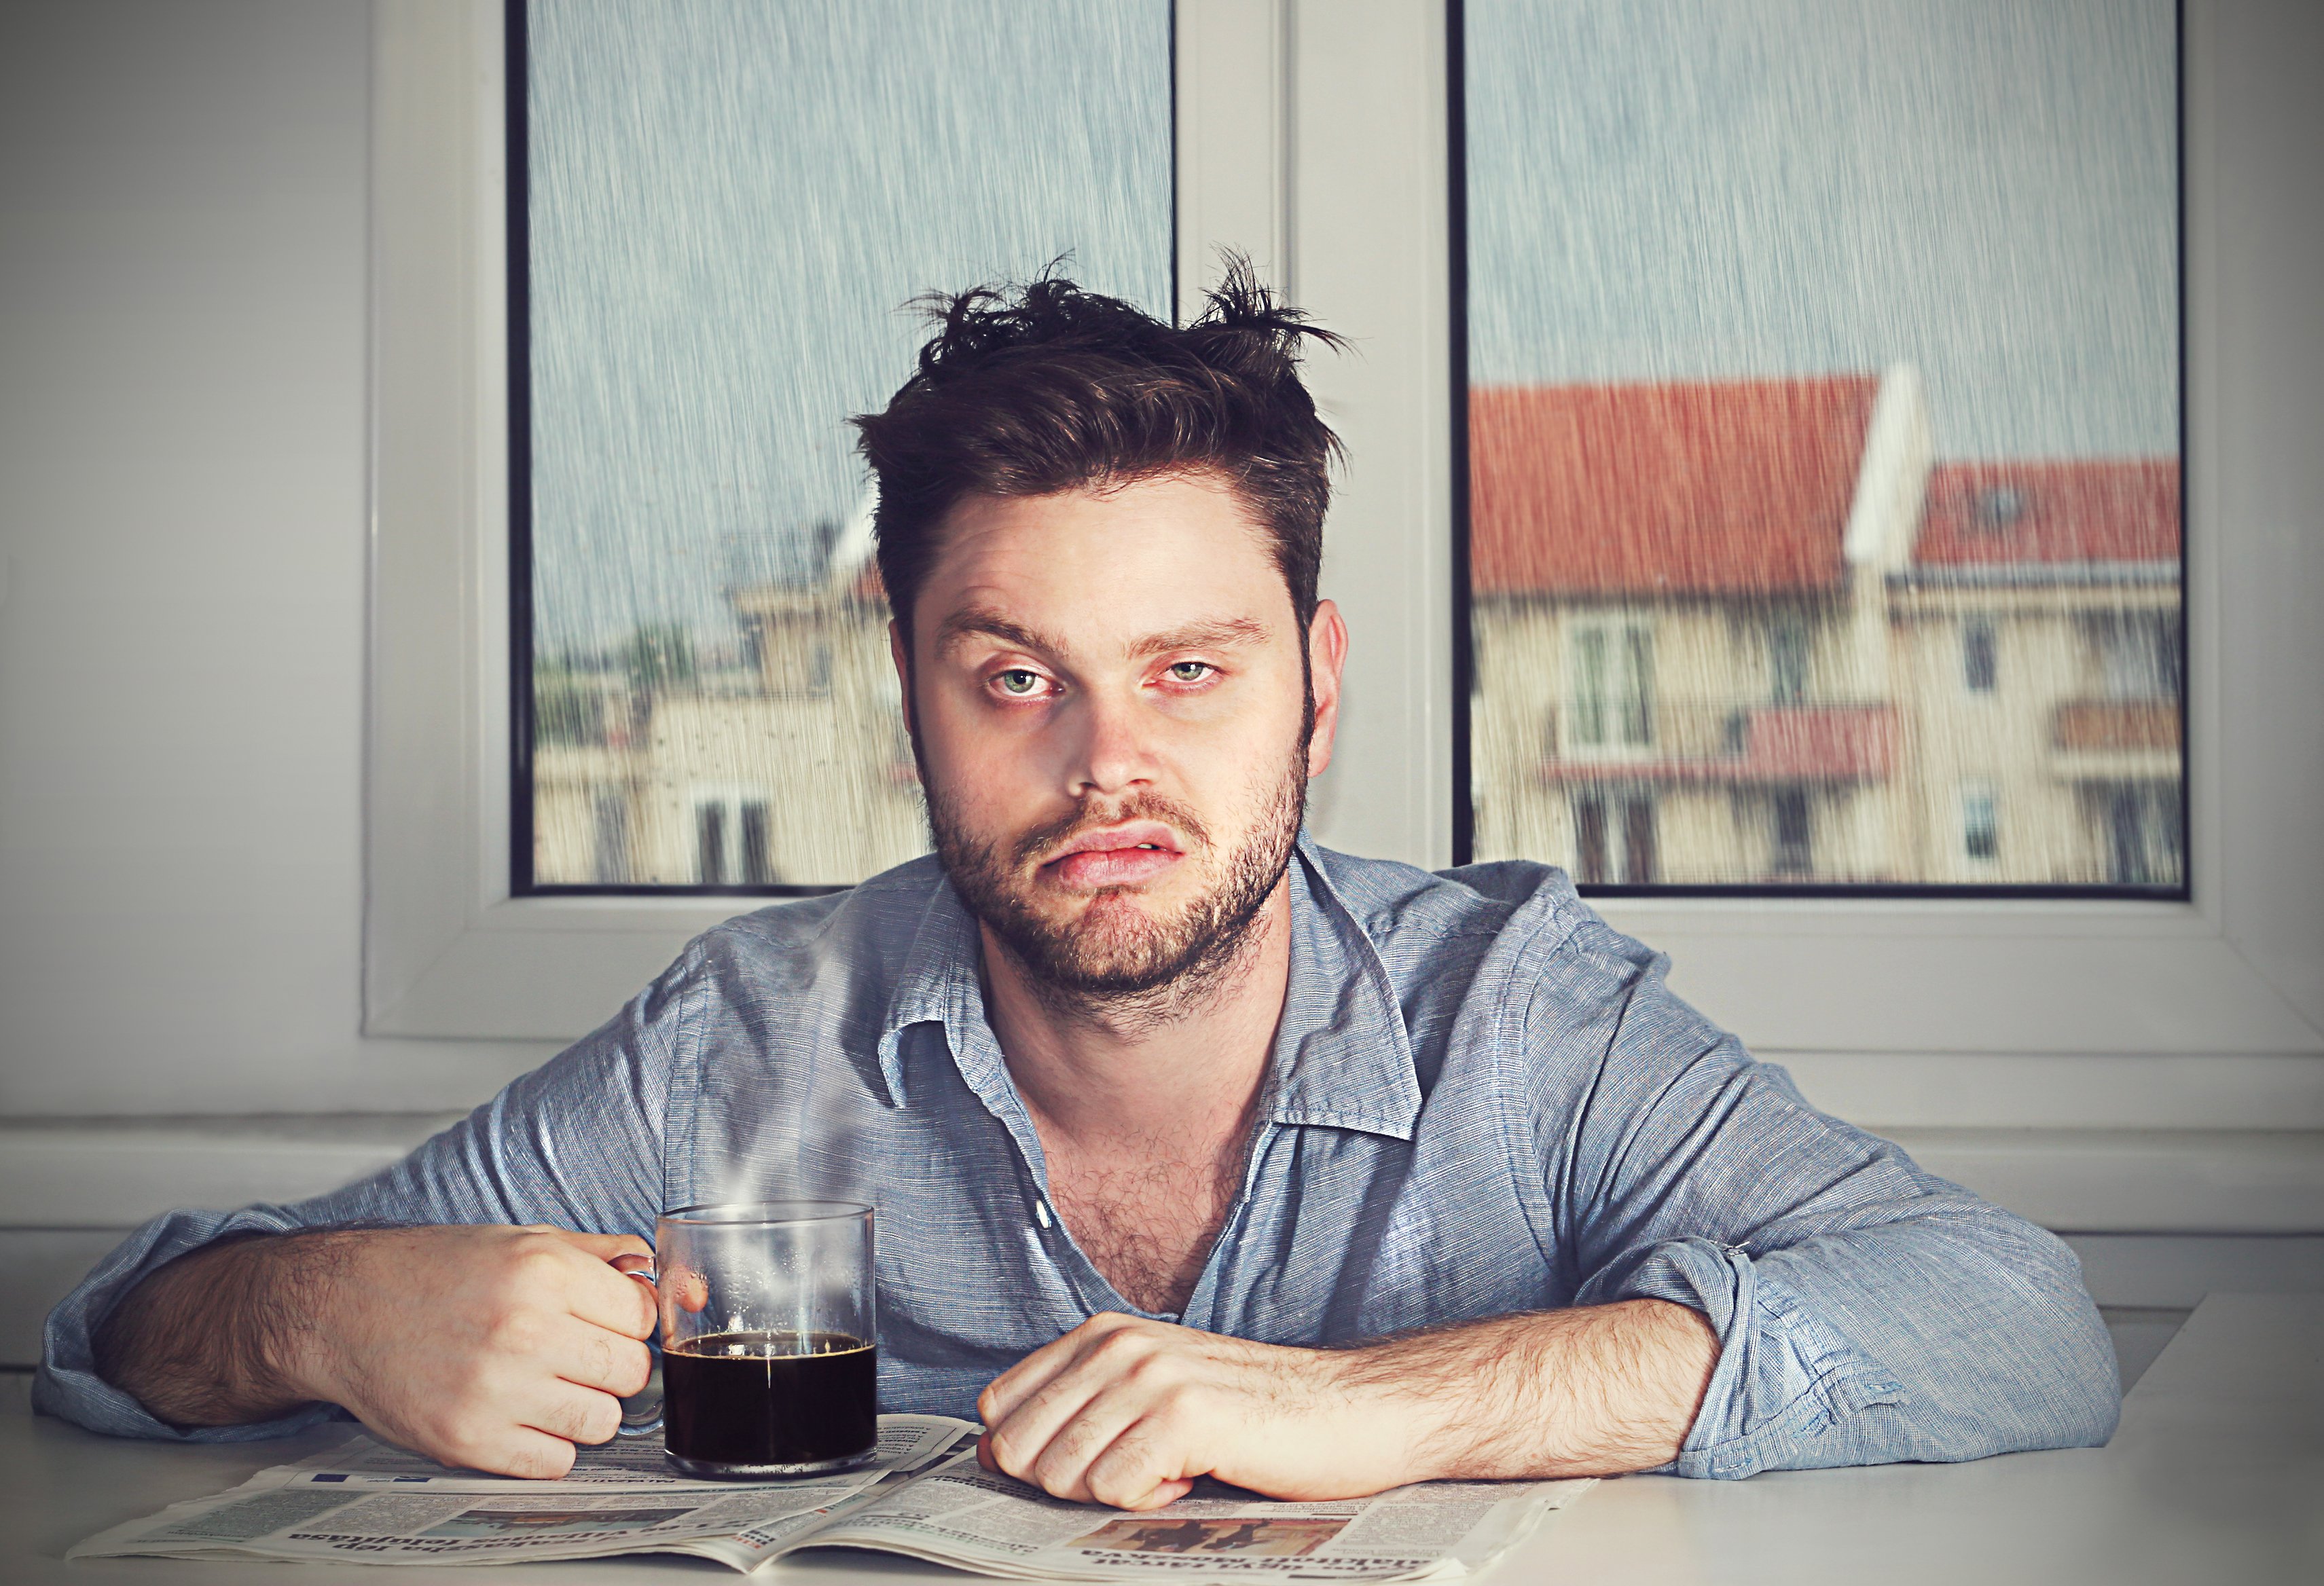 Man looking disheveled while drinking coffee | Photo: Shutterstock/Akos Nagy